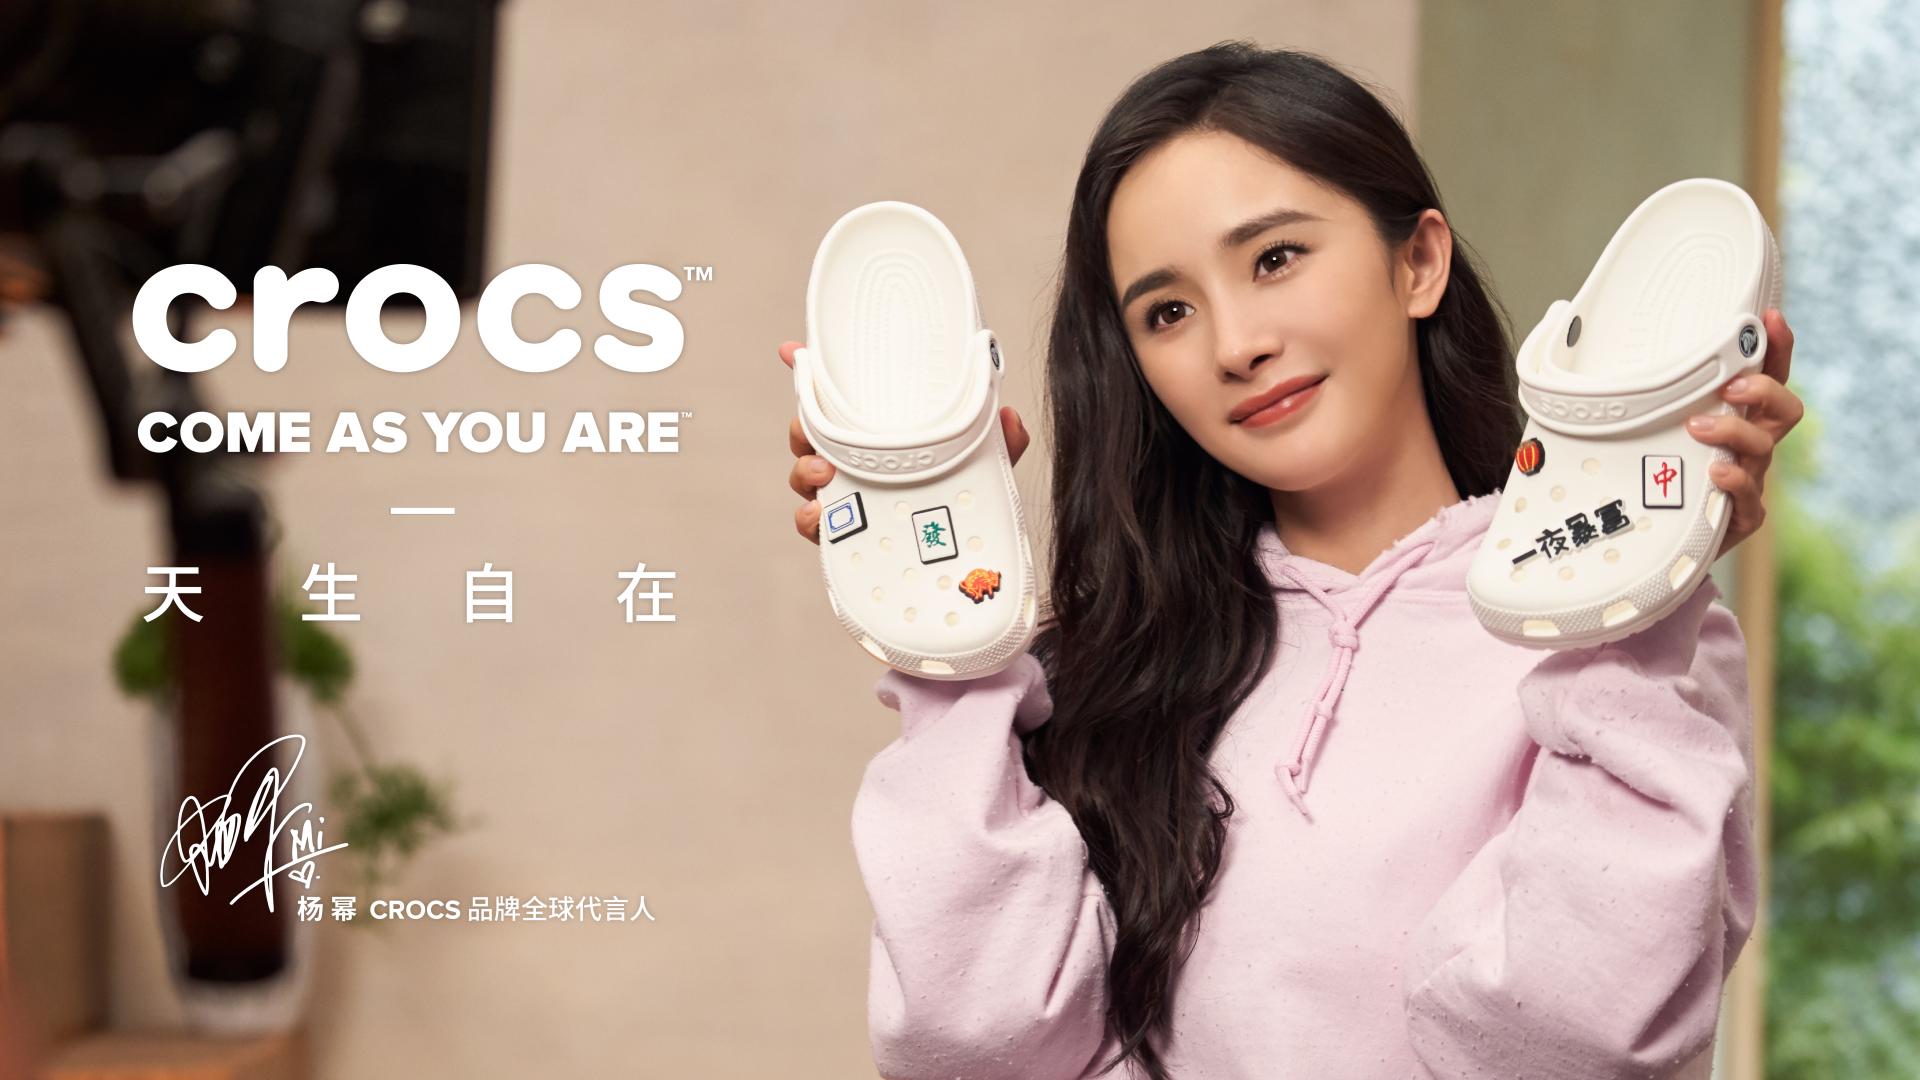 Crocs Chinese tagline